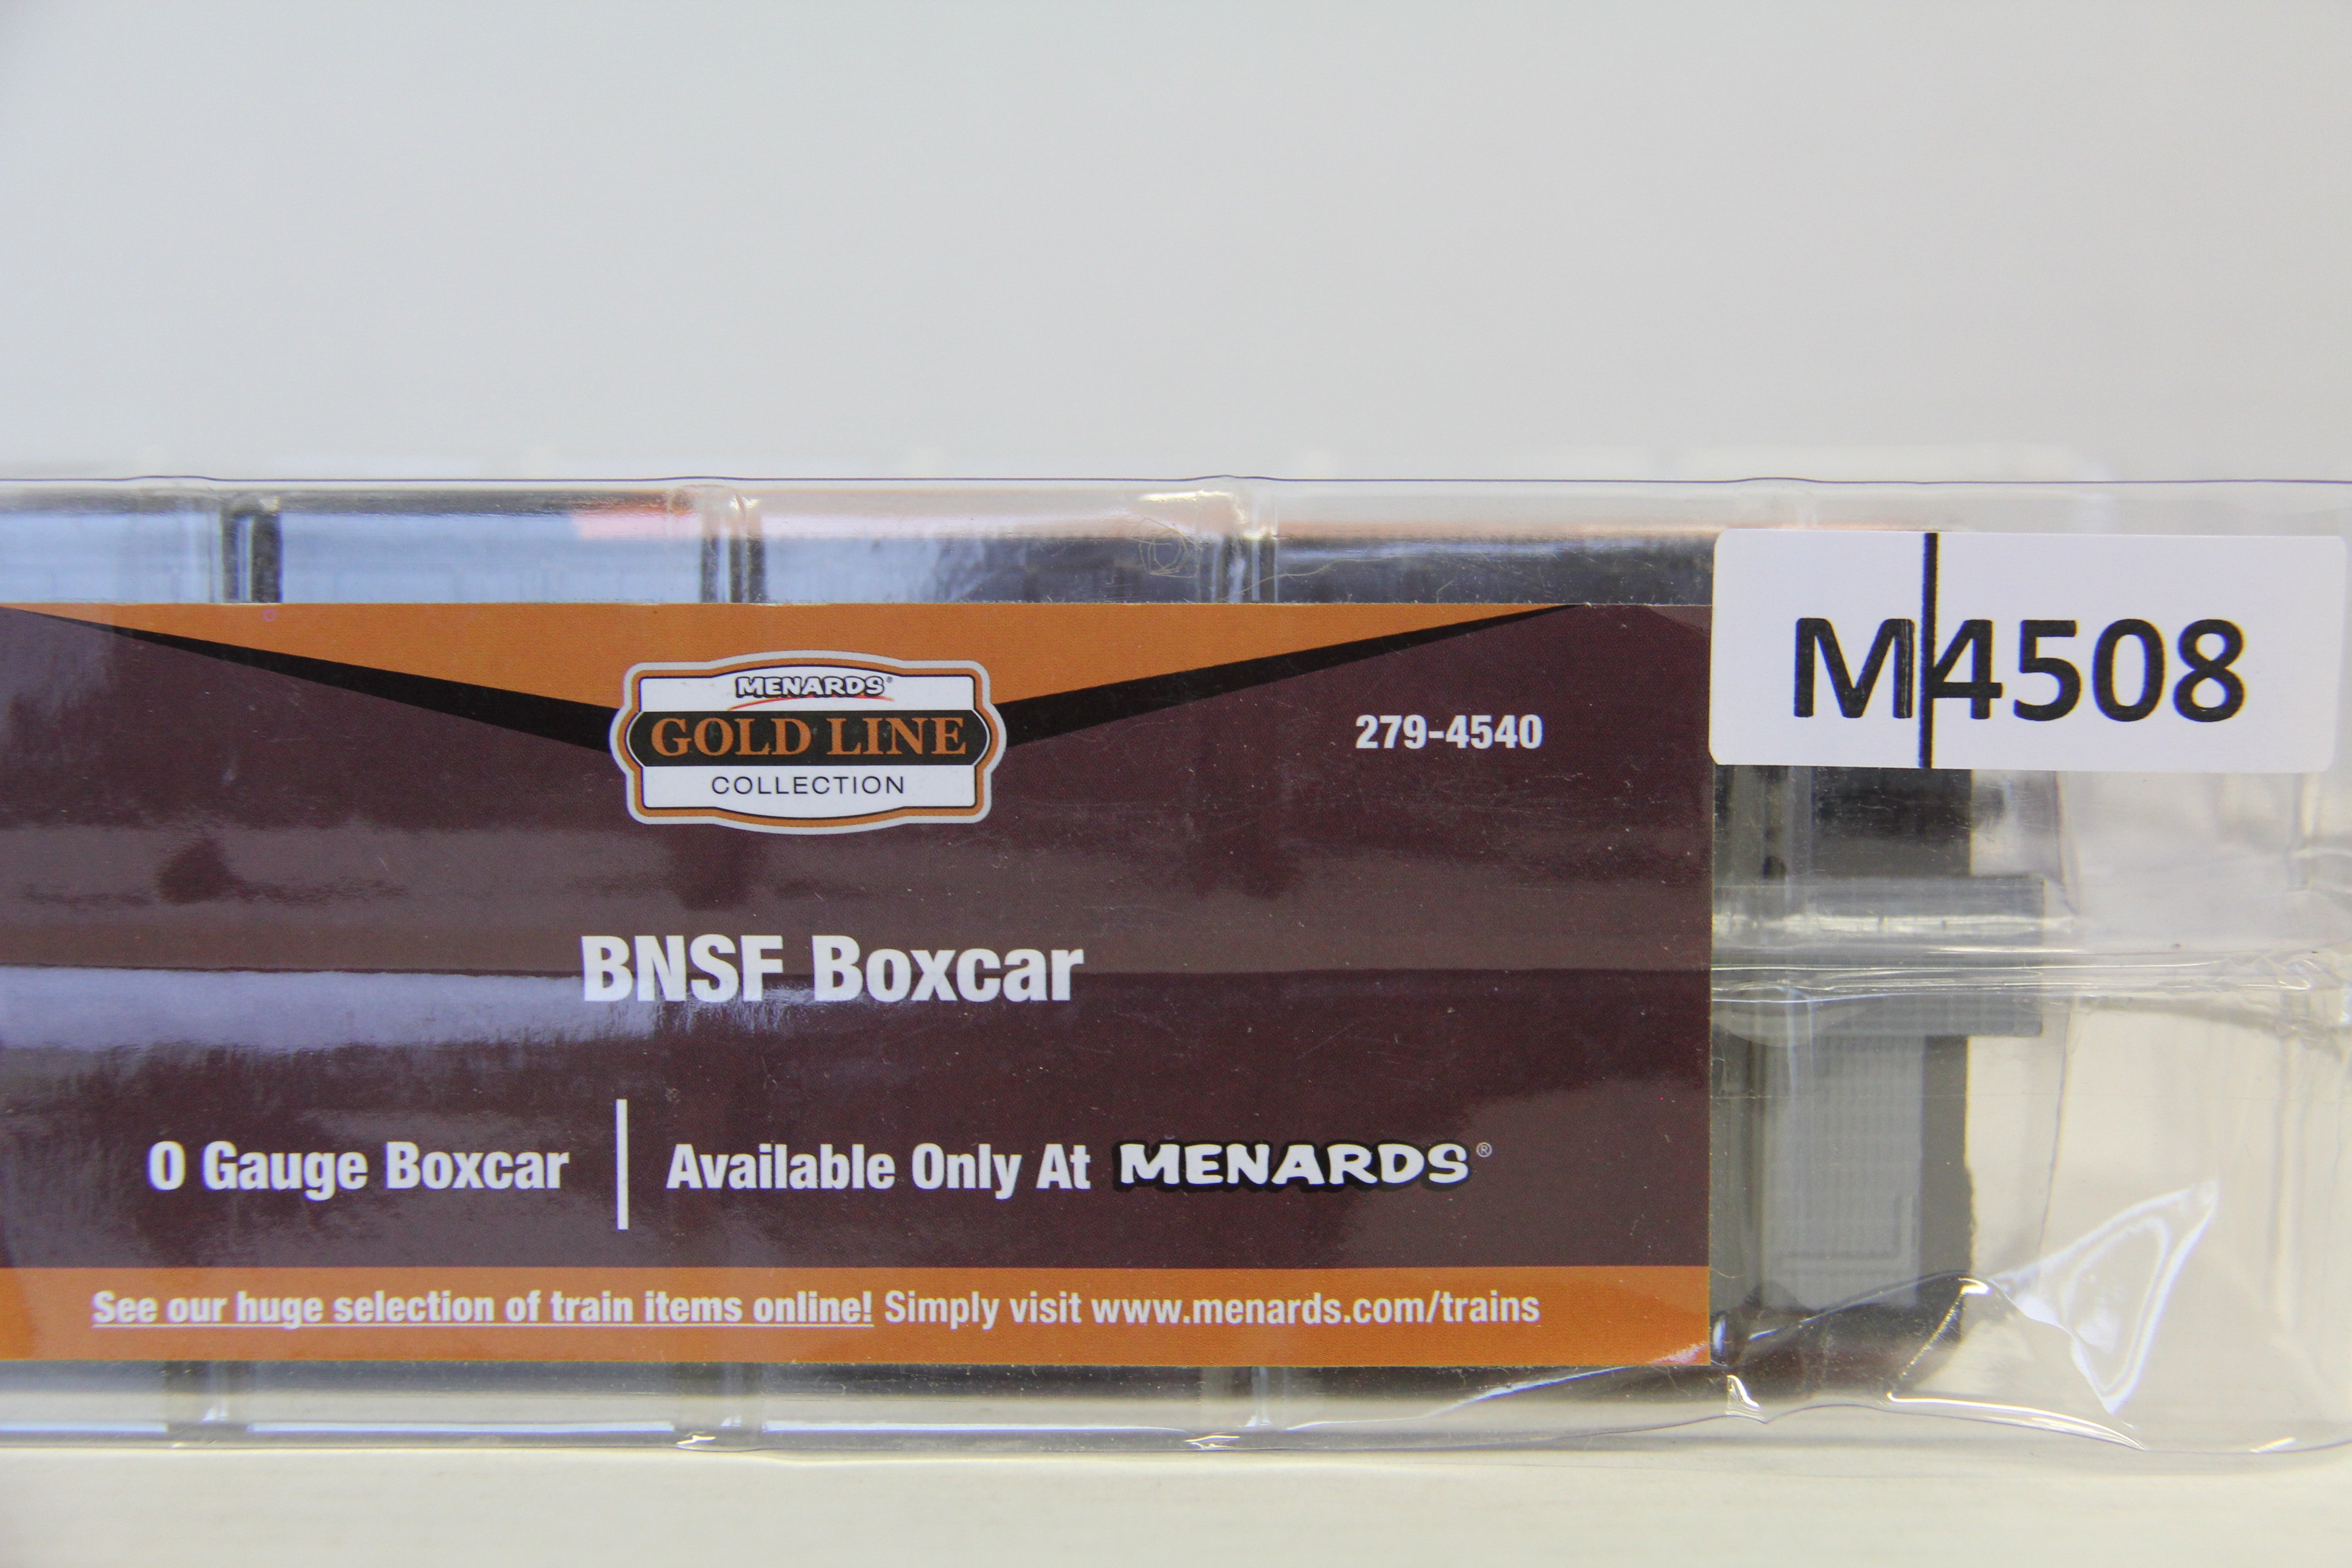 Menards 279-4540 BNSF Boxcar-Second hand-M4508